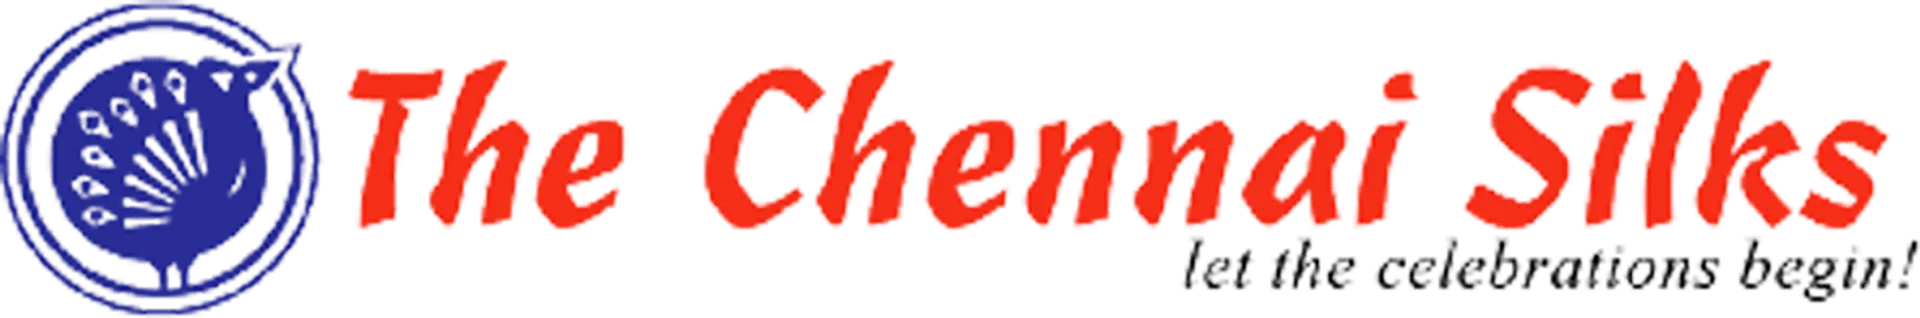 THE CHENNAI SILKS logo current weekly ad